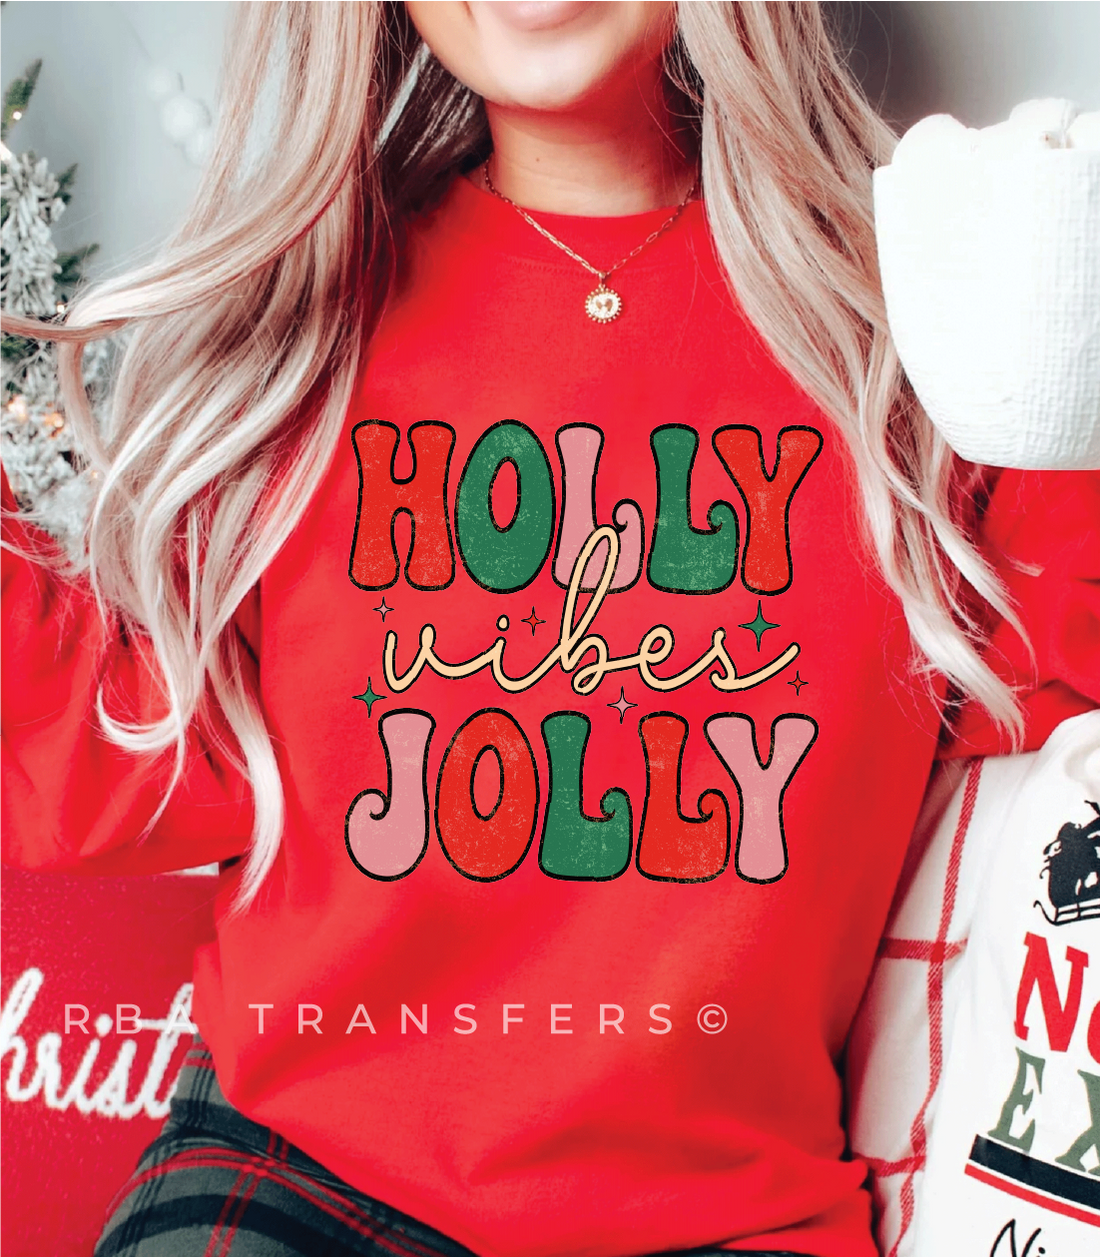 Holly VIBES Jolly Full Colour Transfer